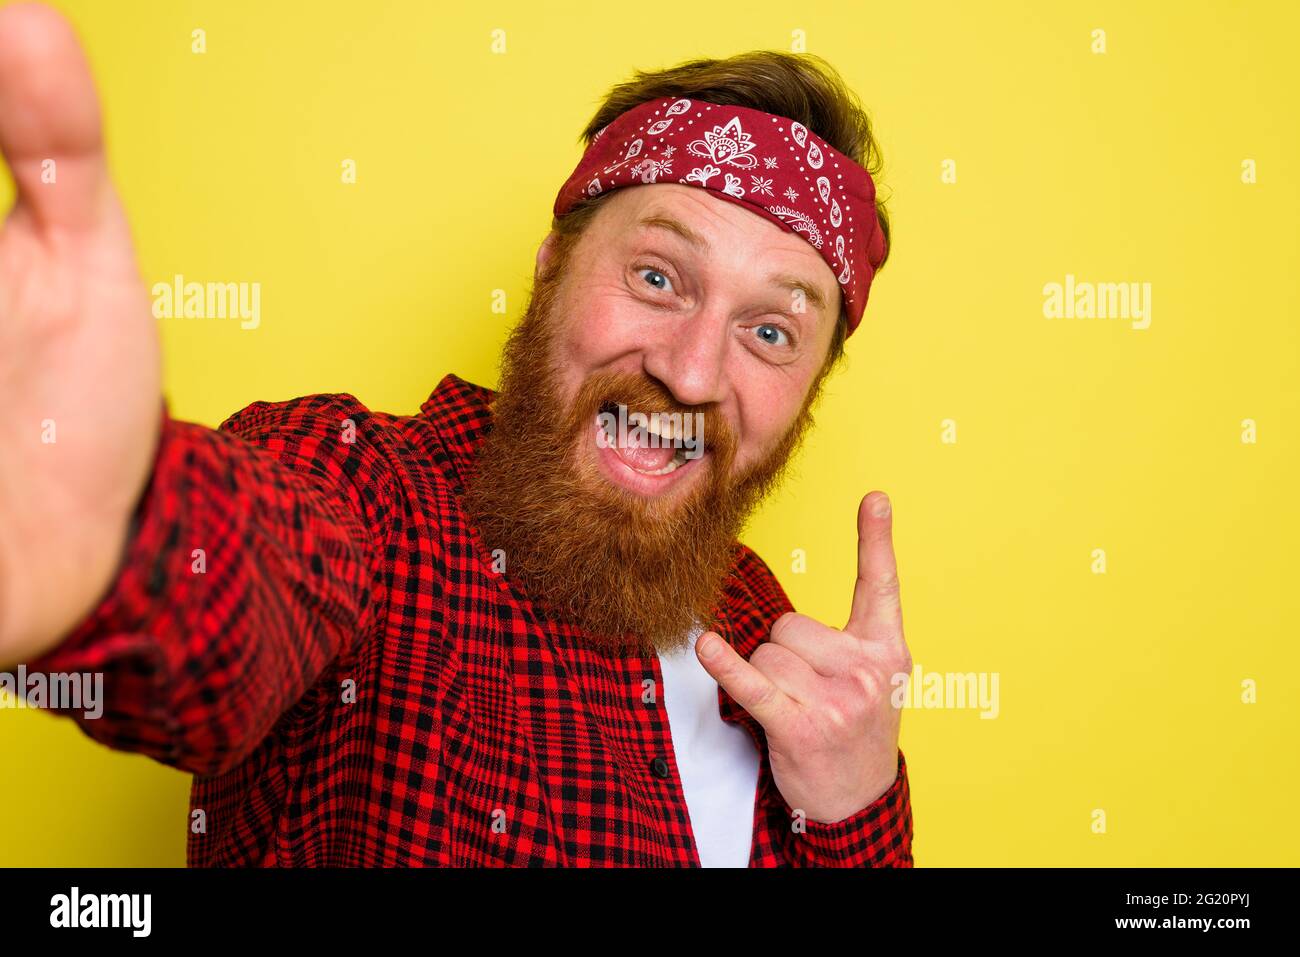 Uomo felice con barba e bandana in testa Foto stock - Alamy